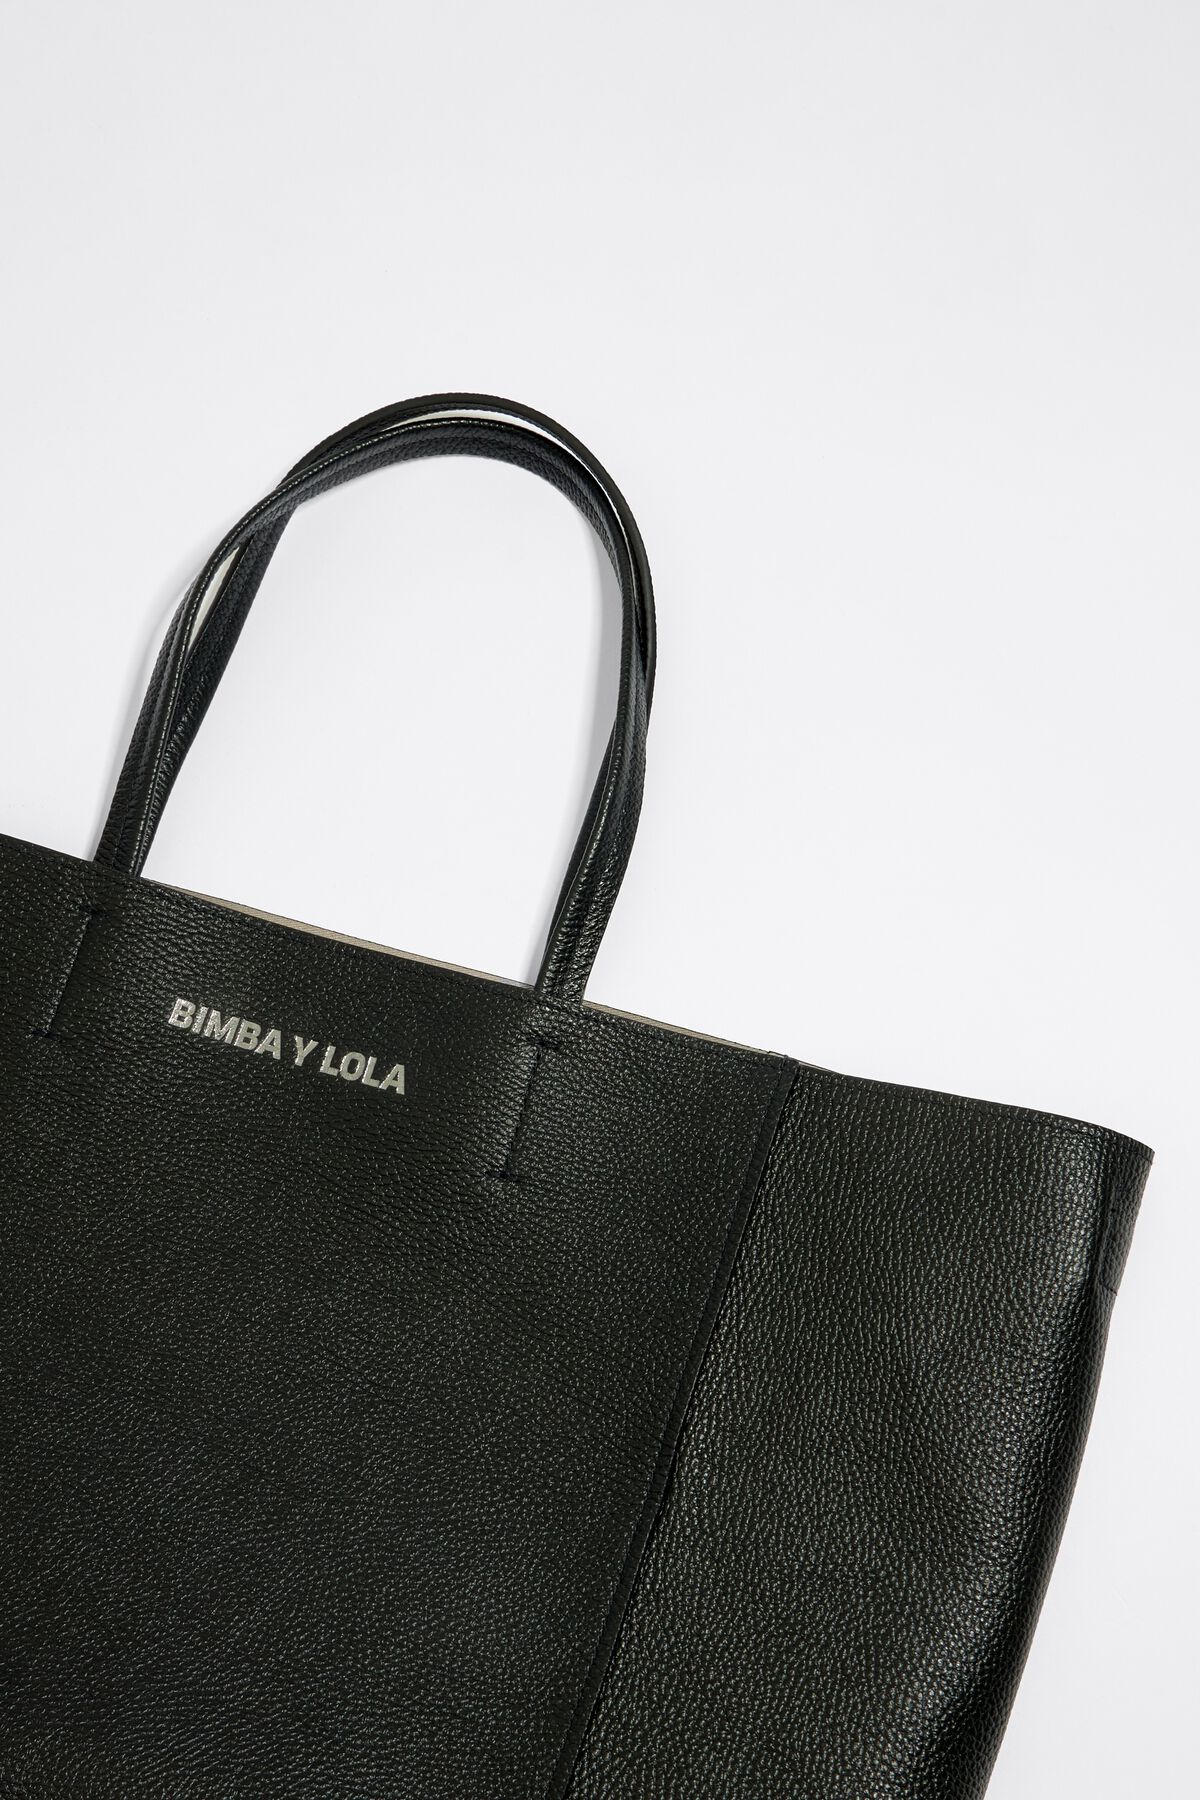 Bimba Y Lola XL Black Shopper Bag